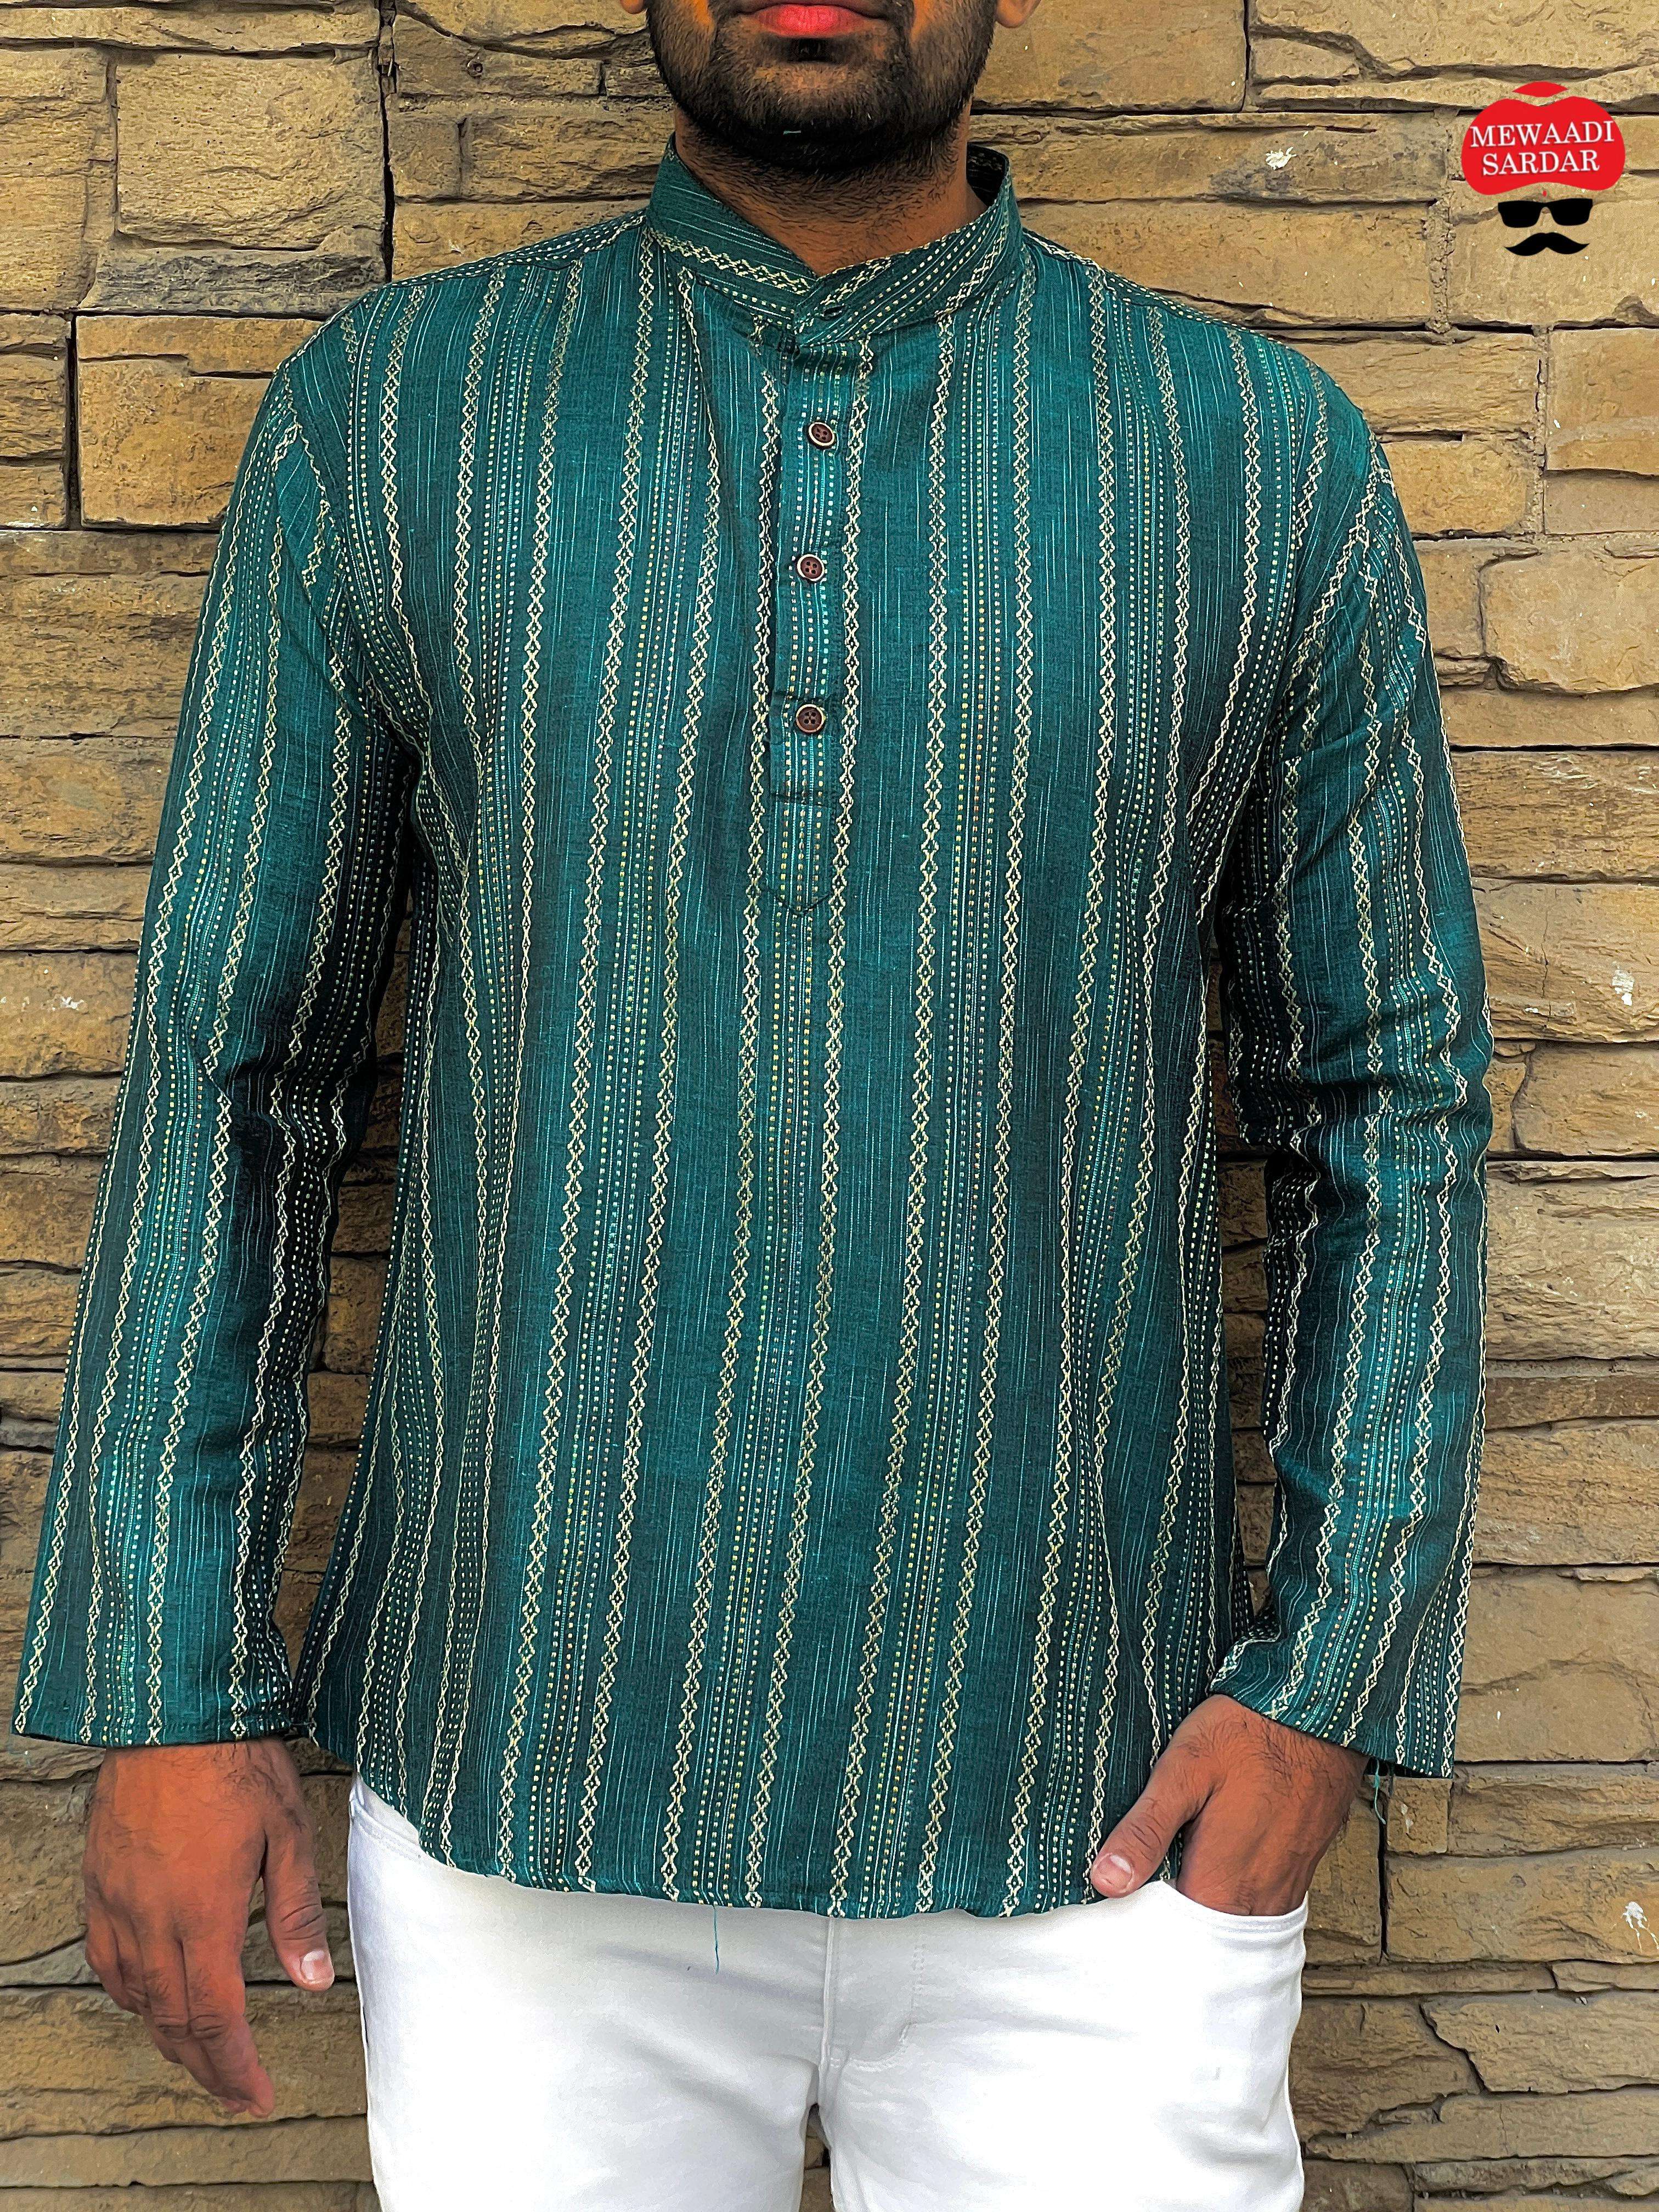 leo 2 by mewaadi sardar hit colours collection full sleeves short length kurta fabric khadhi pure soft cotton mens wear kurta short shirt style kurta 